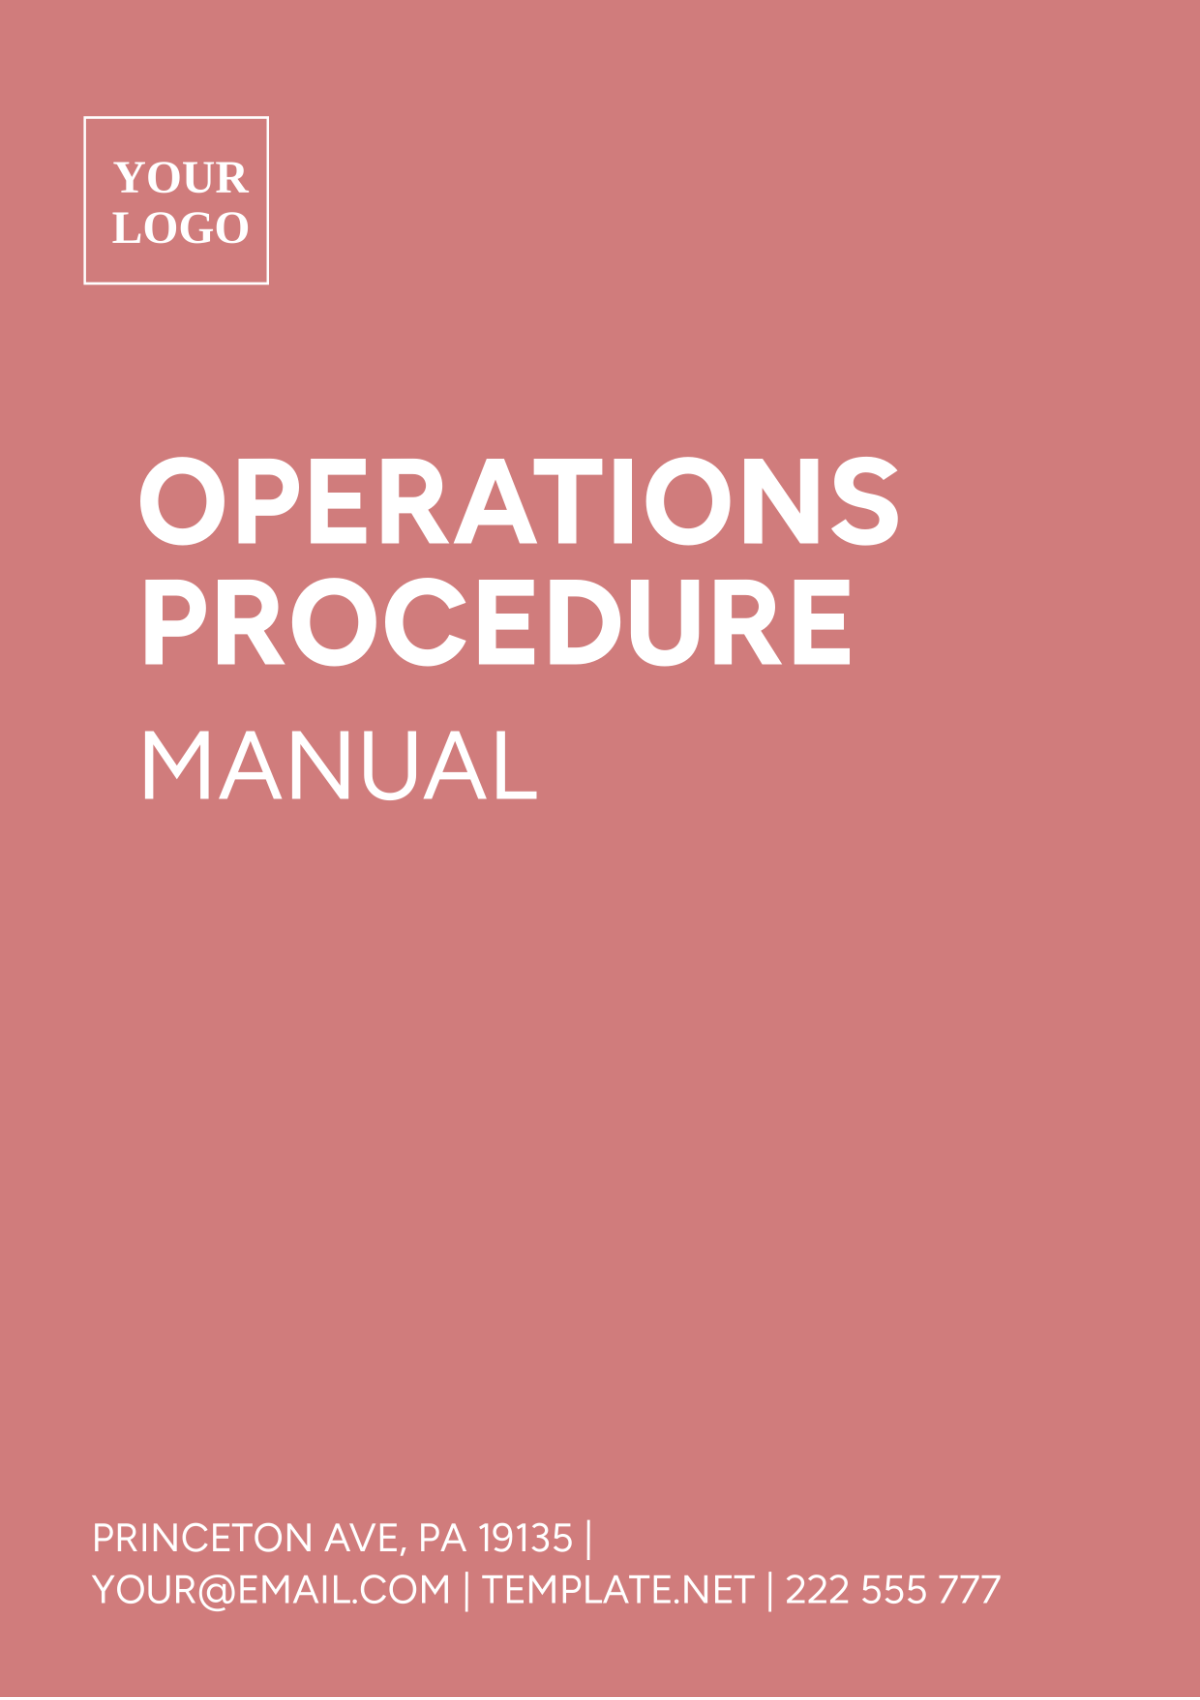 Operations Procedure Manual Template